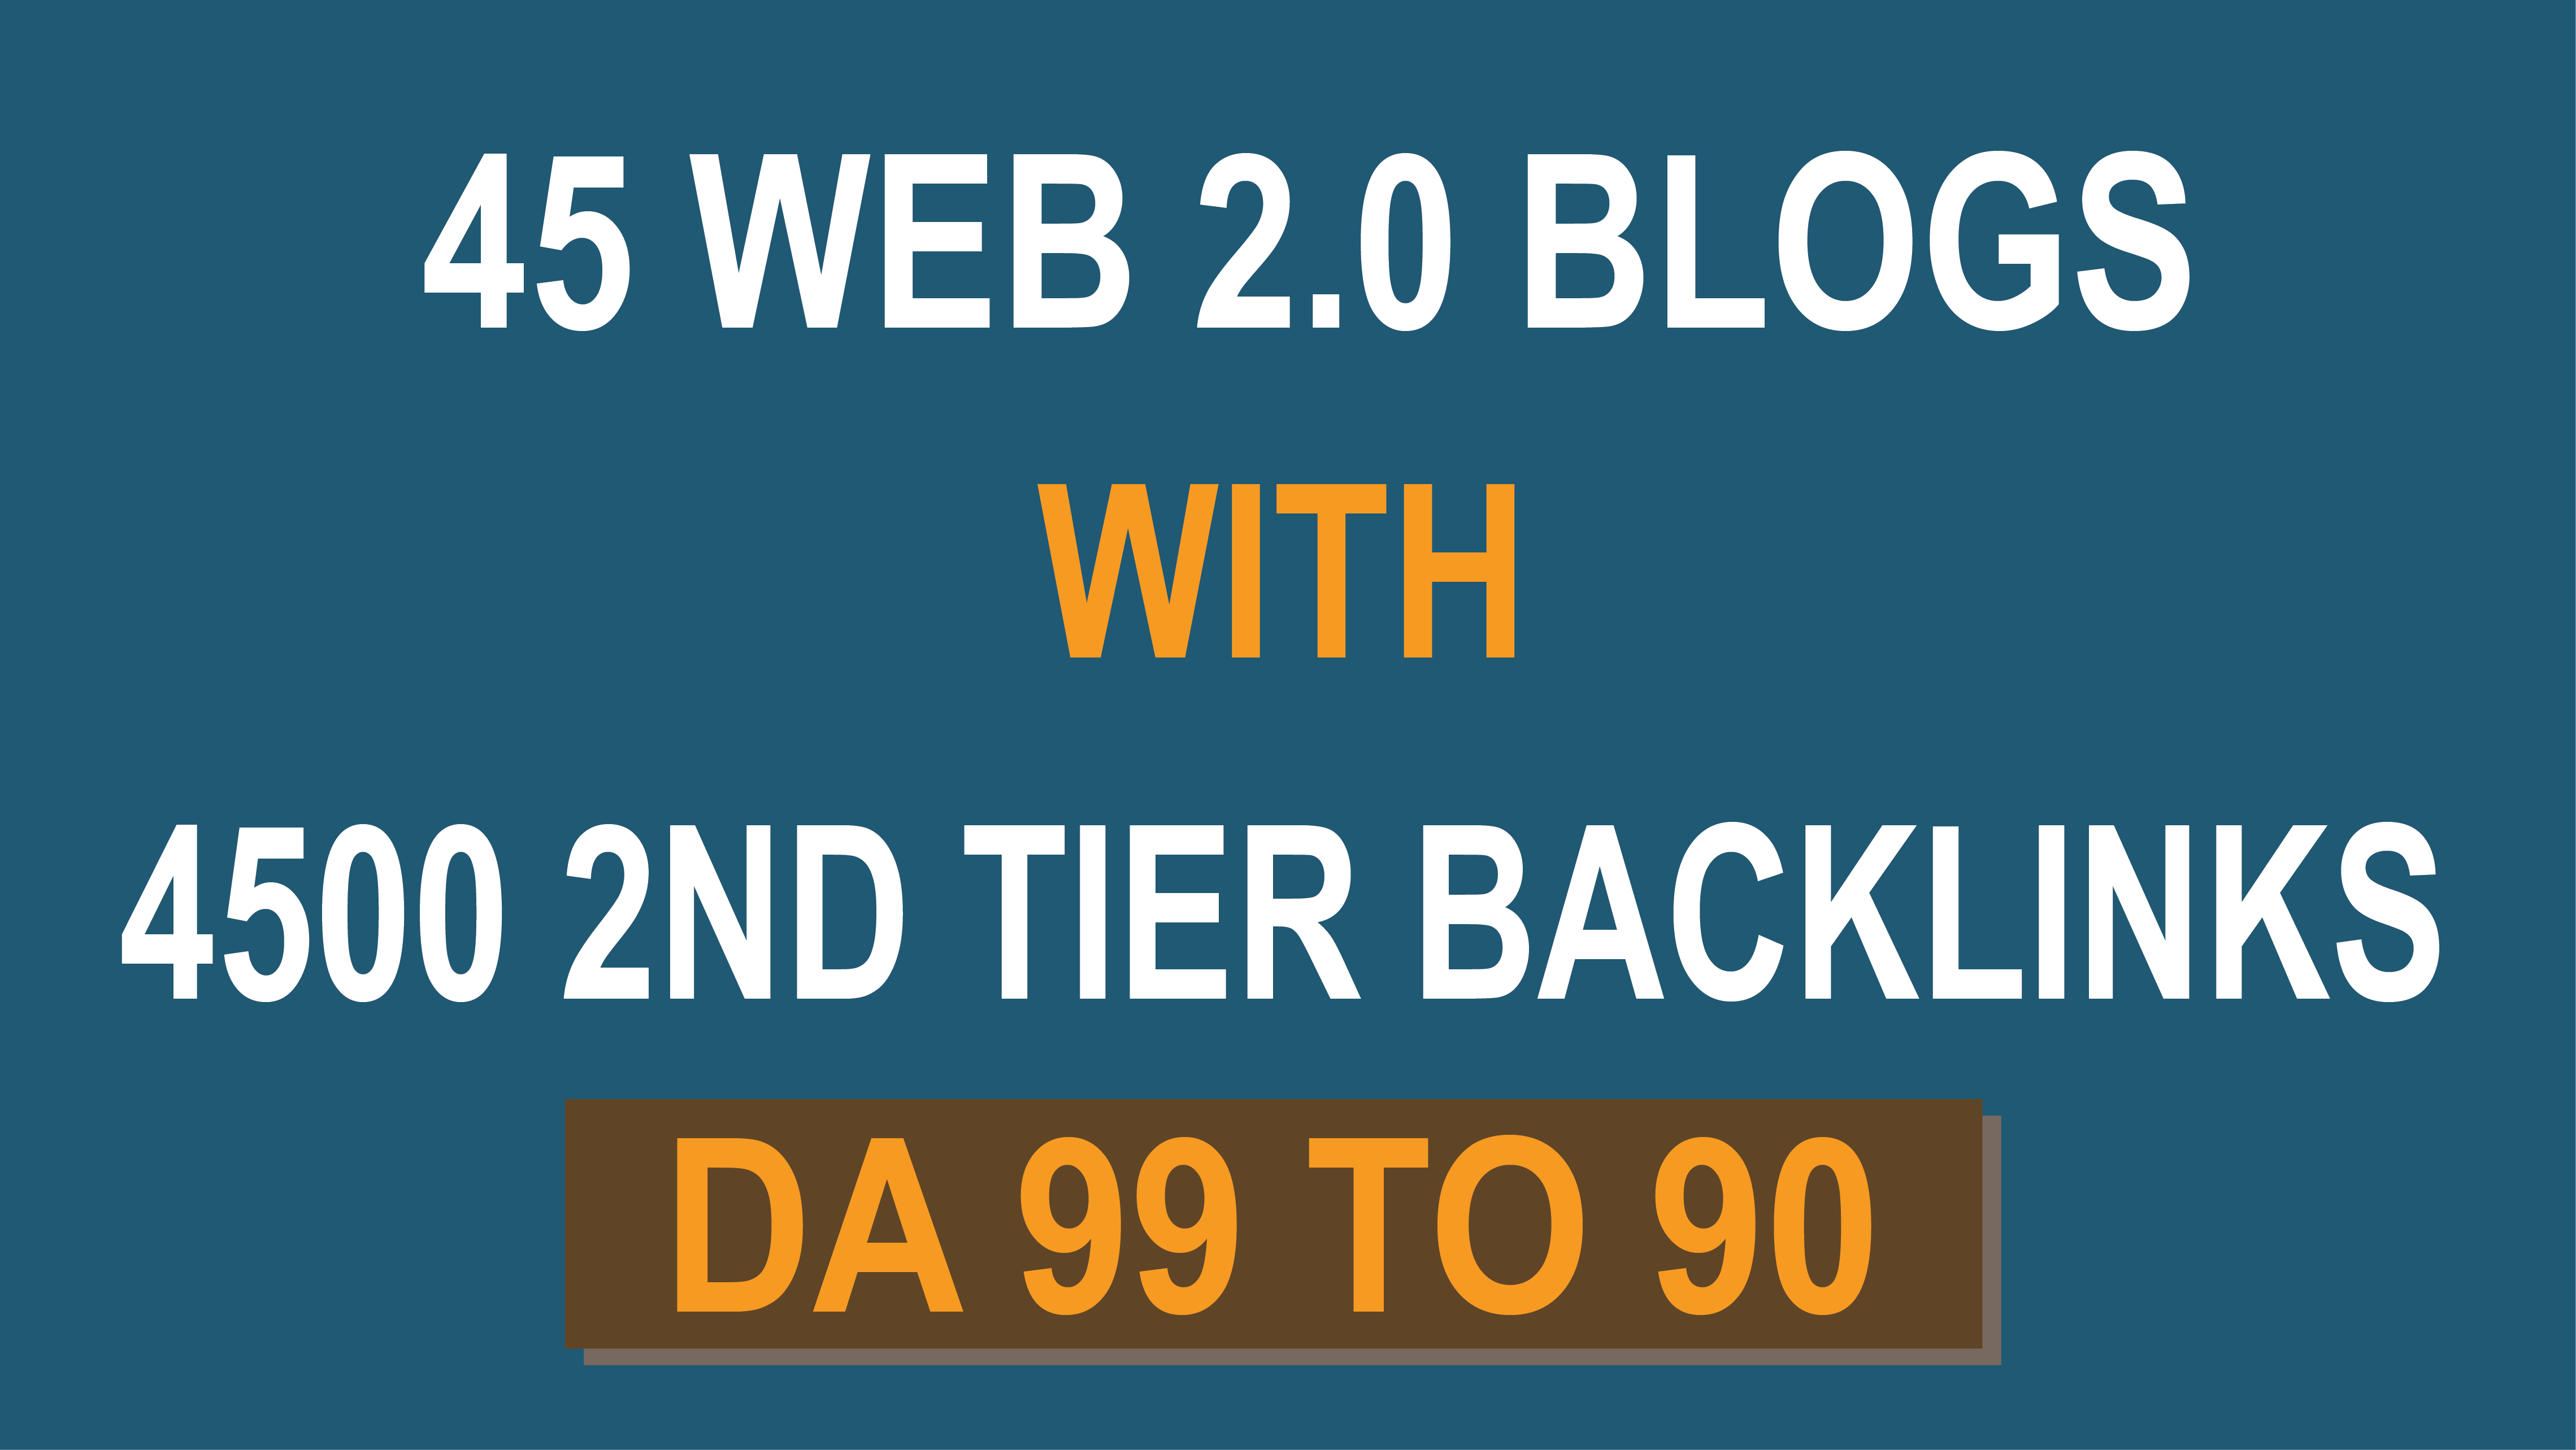 Powerful 45 Web 2.0 Blogs With 4500 2nd Tier Backlinks DA 99 to 90